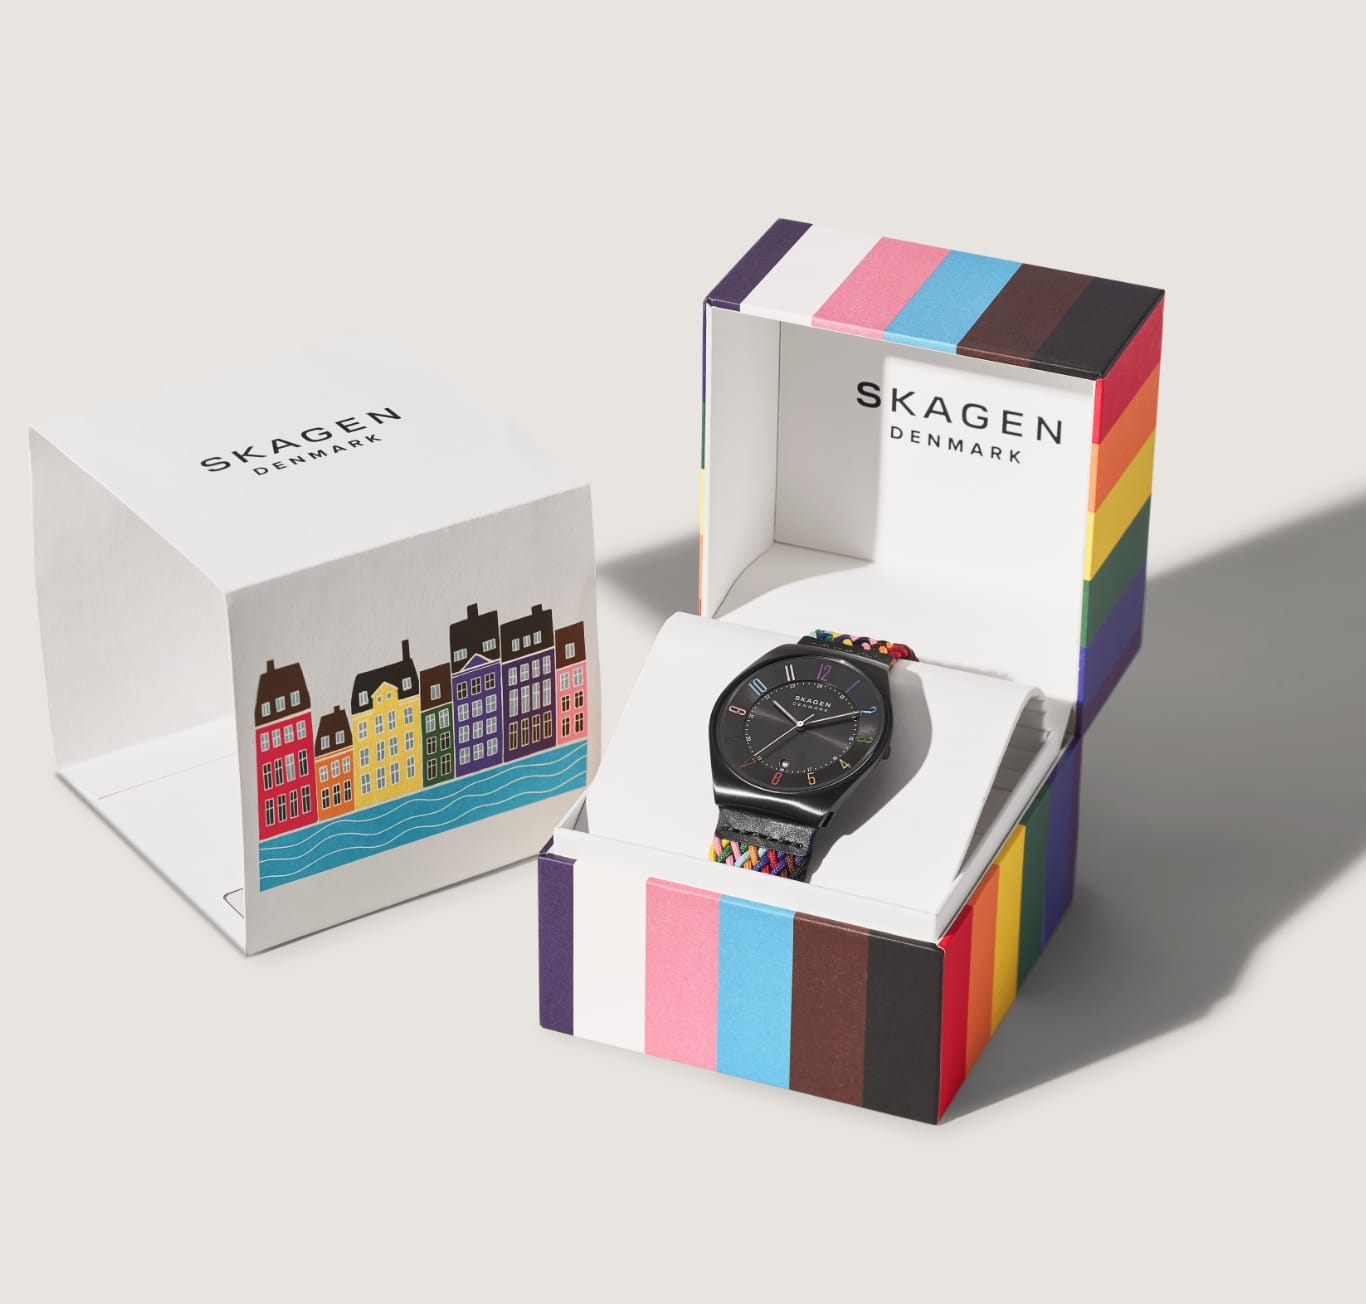 Image of Skagen watch packaging